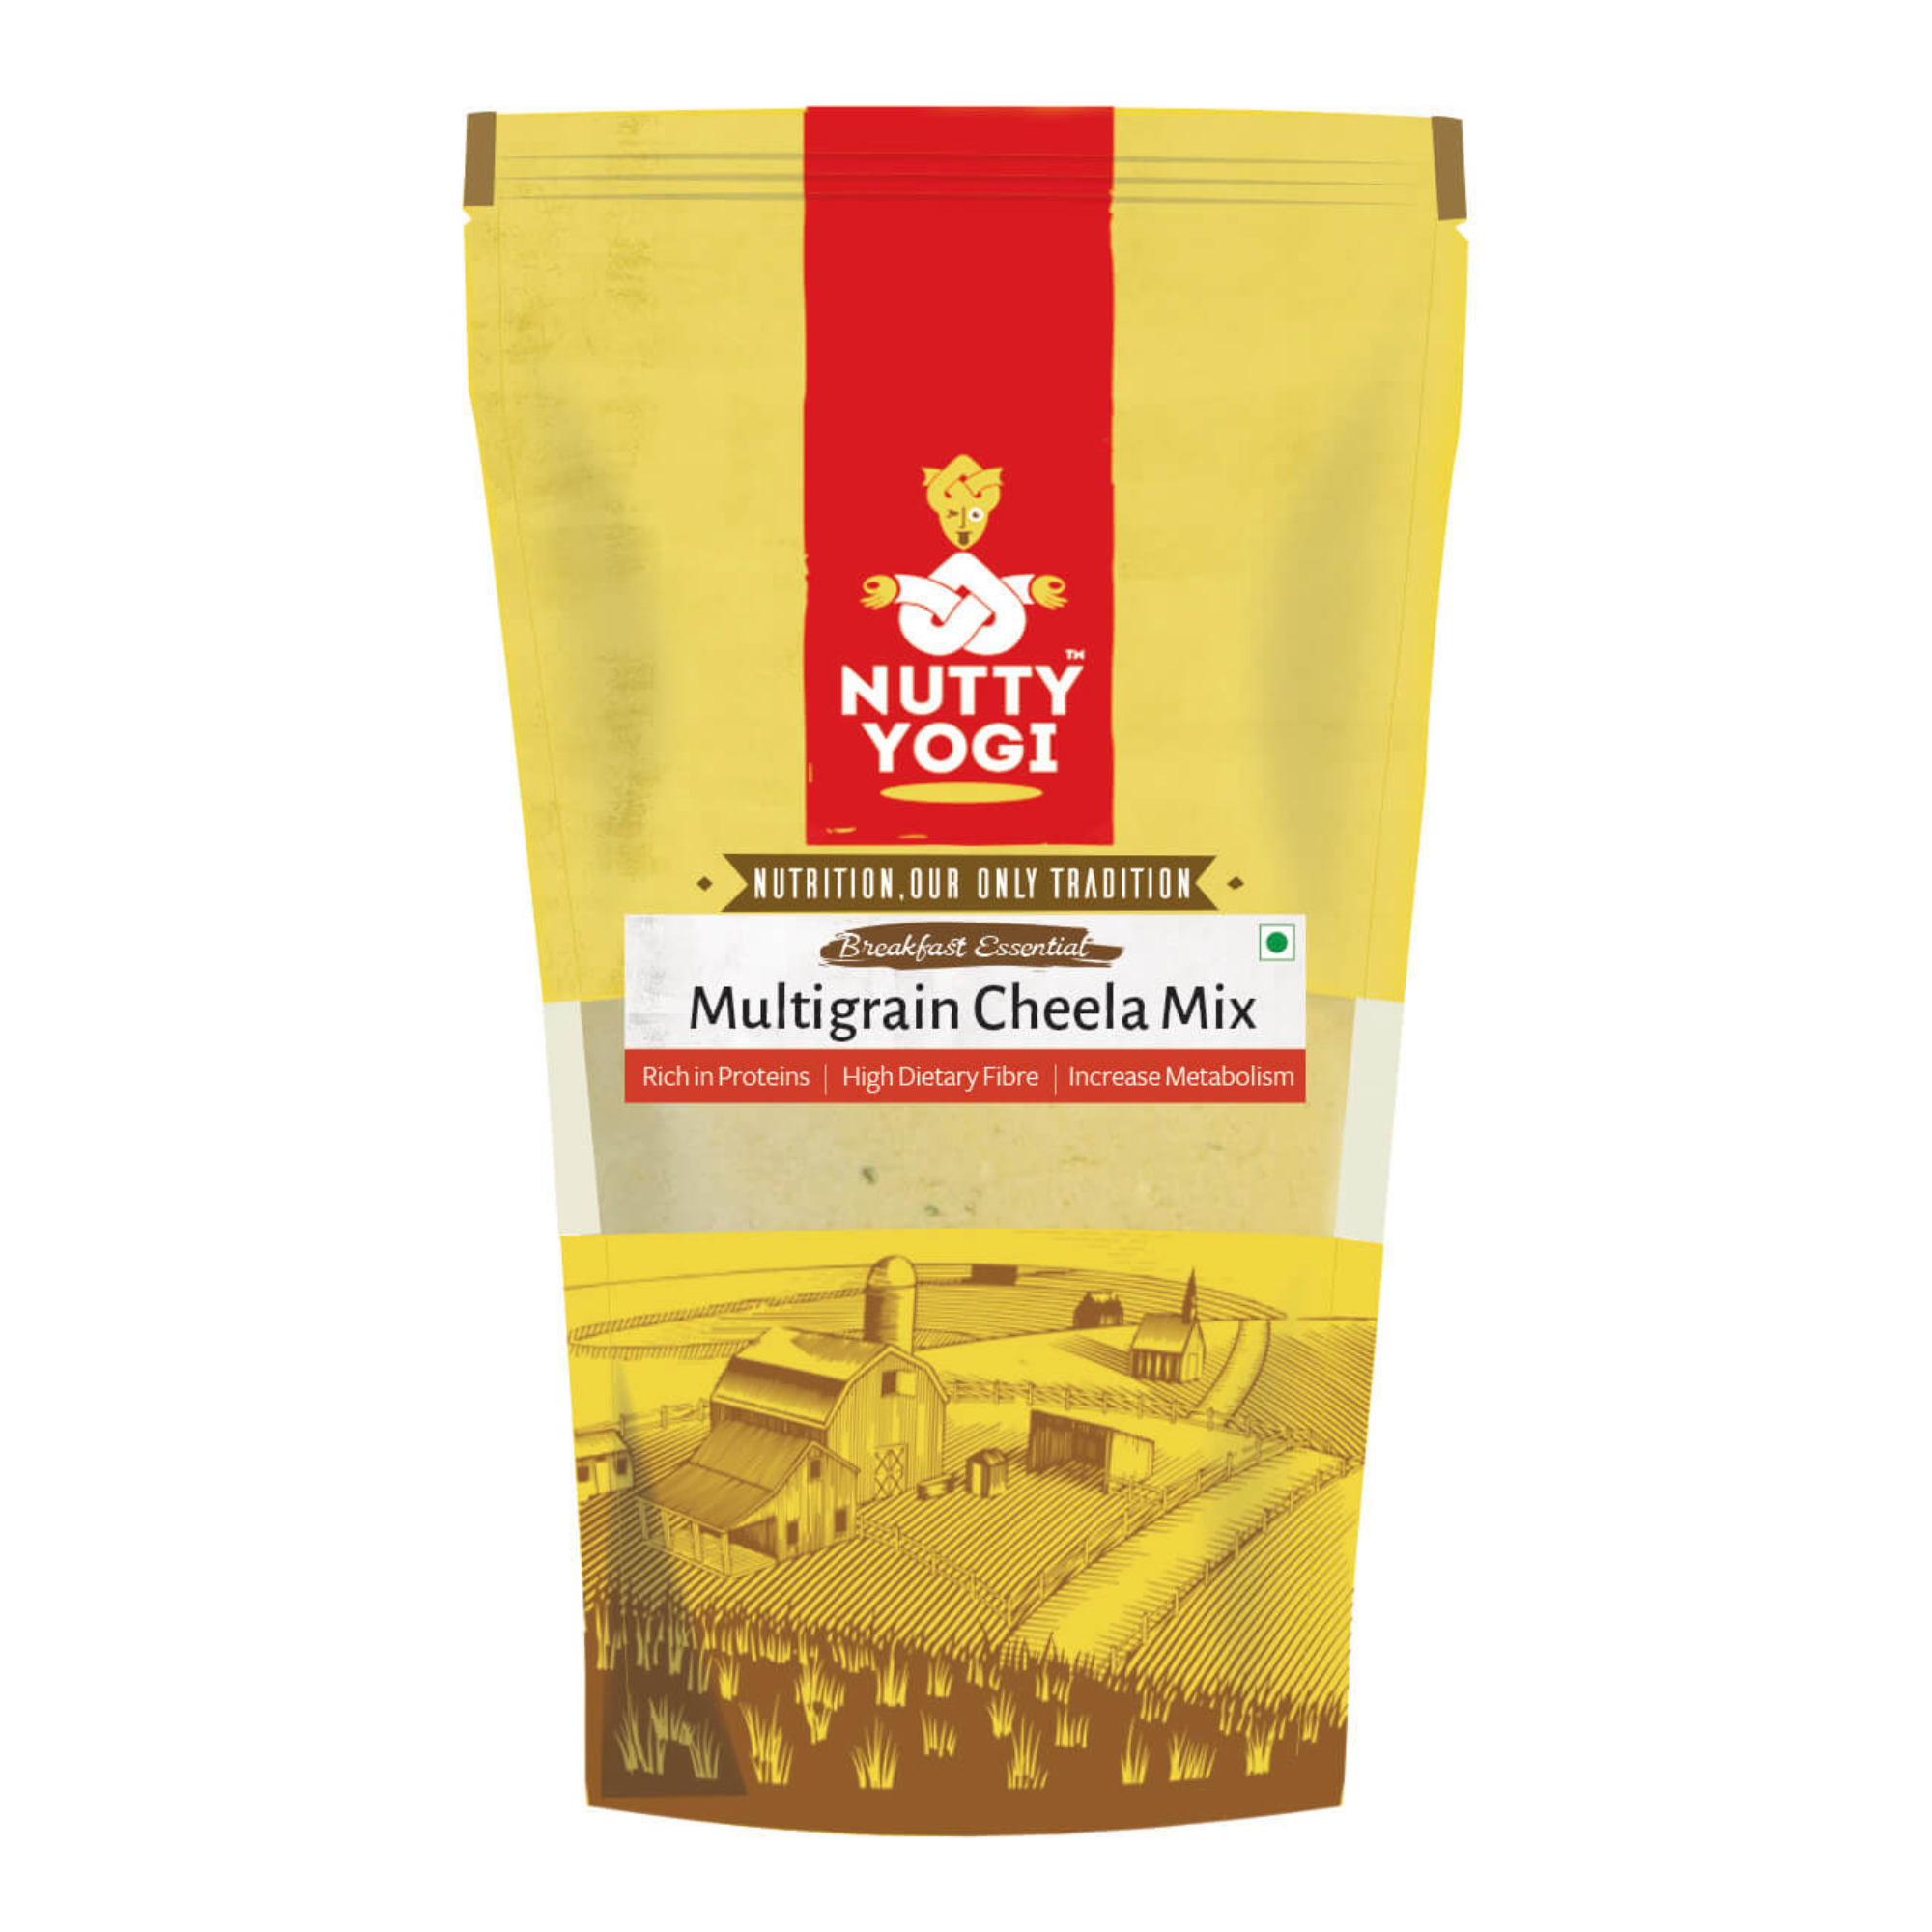 Nutty Yogi Multigrain Cheela Mix - 400g